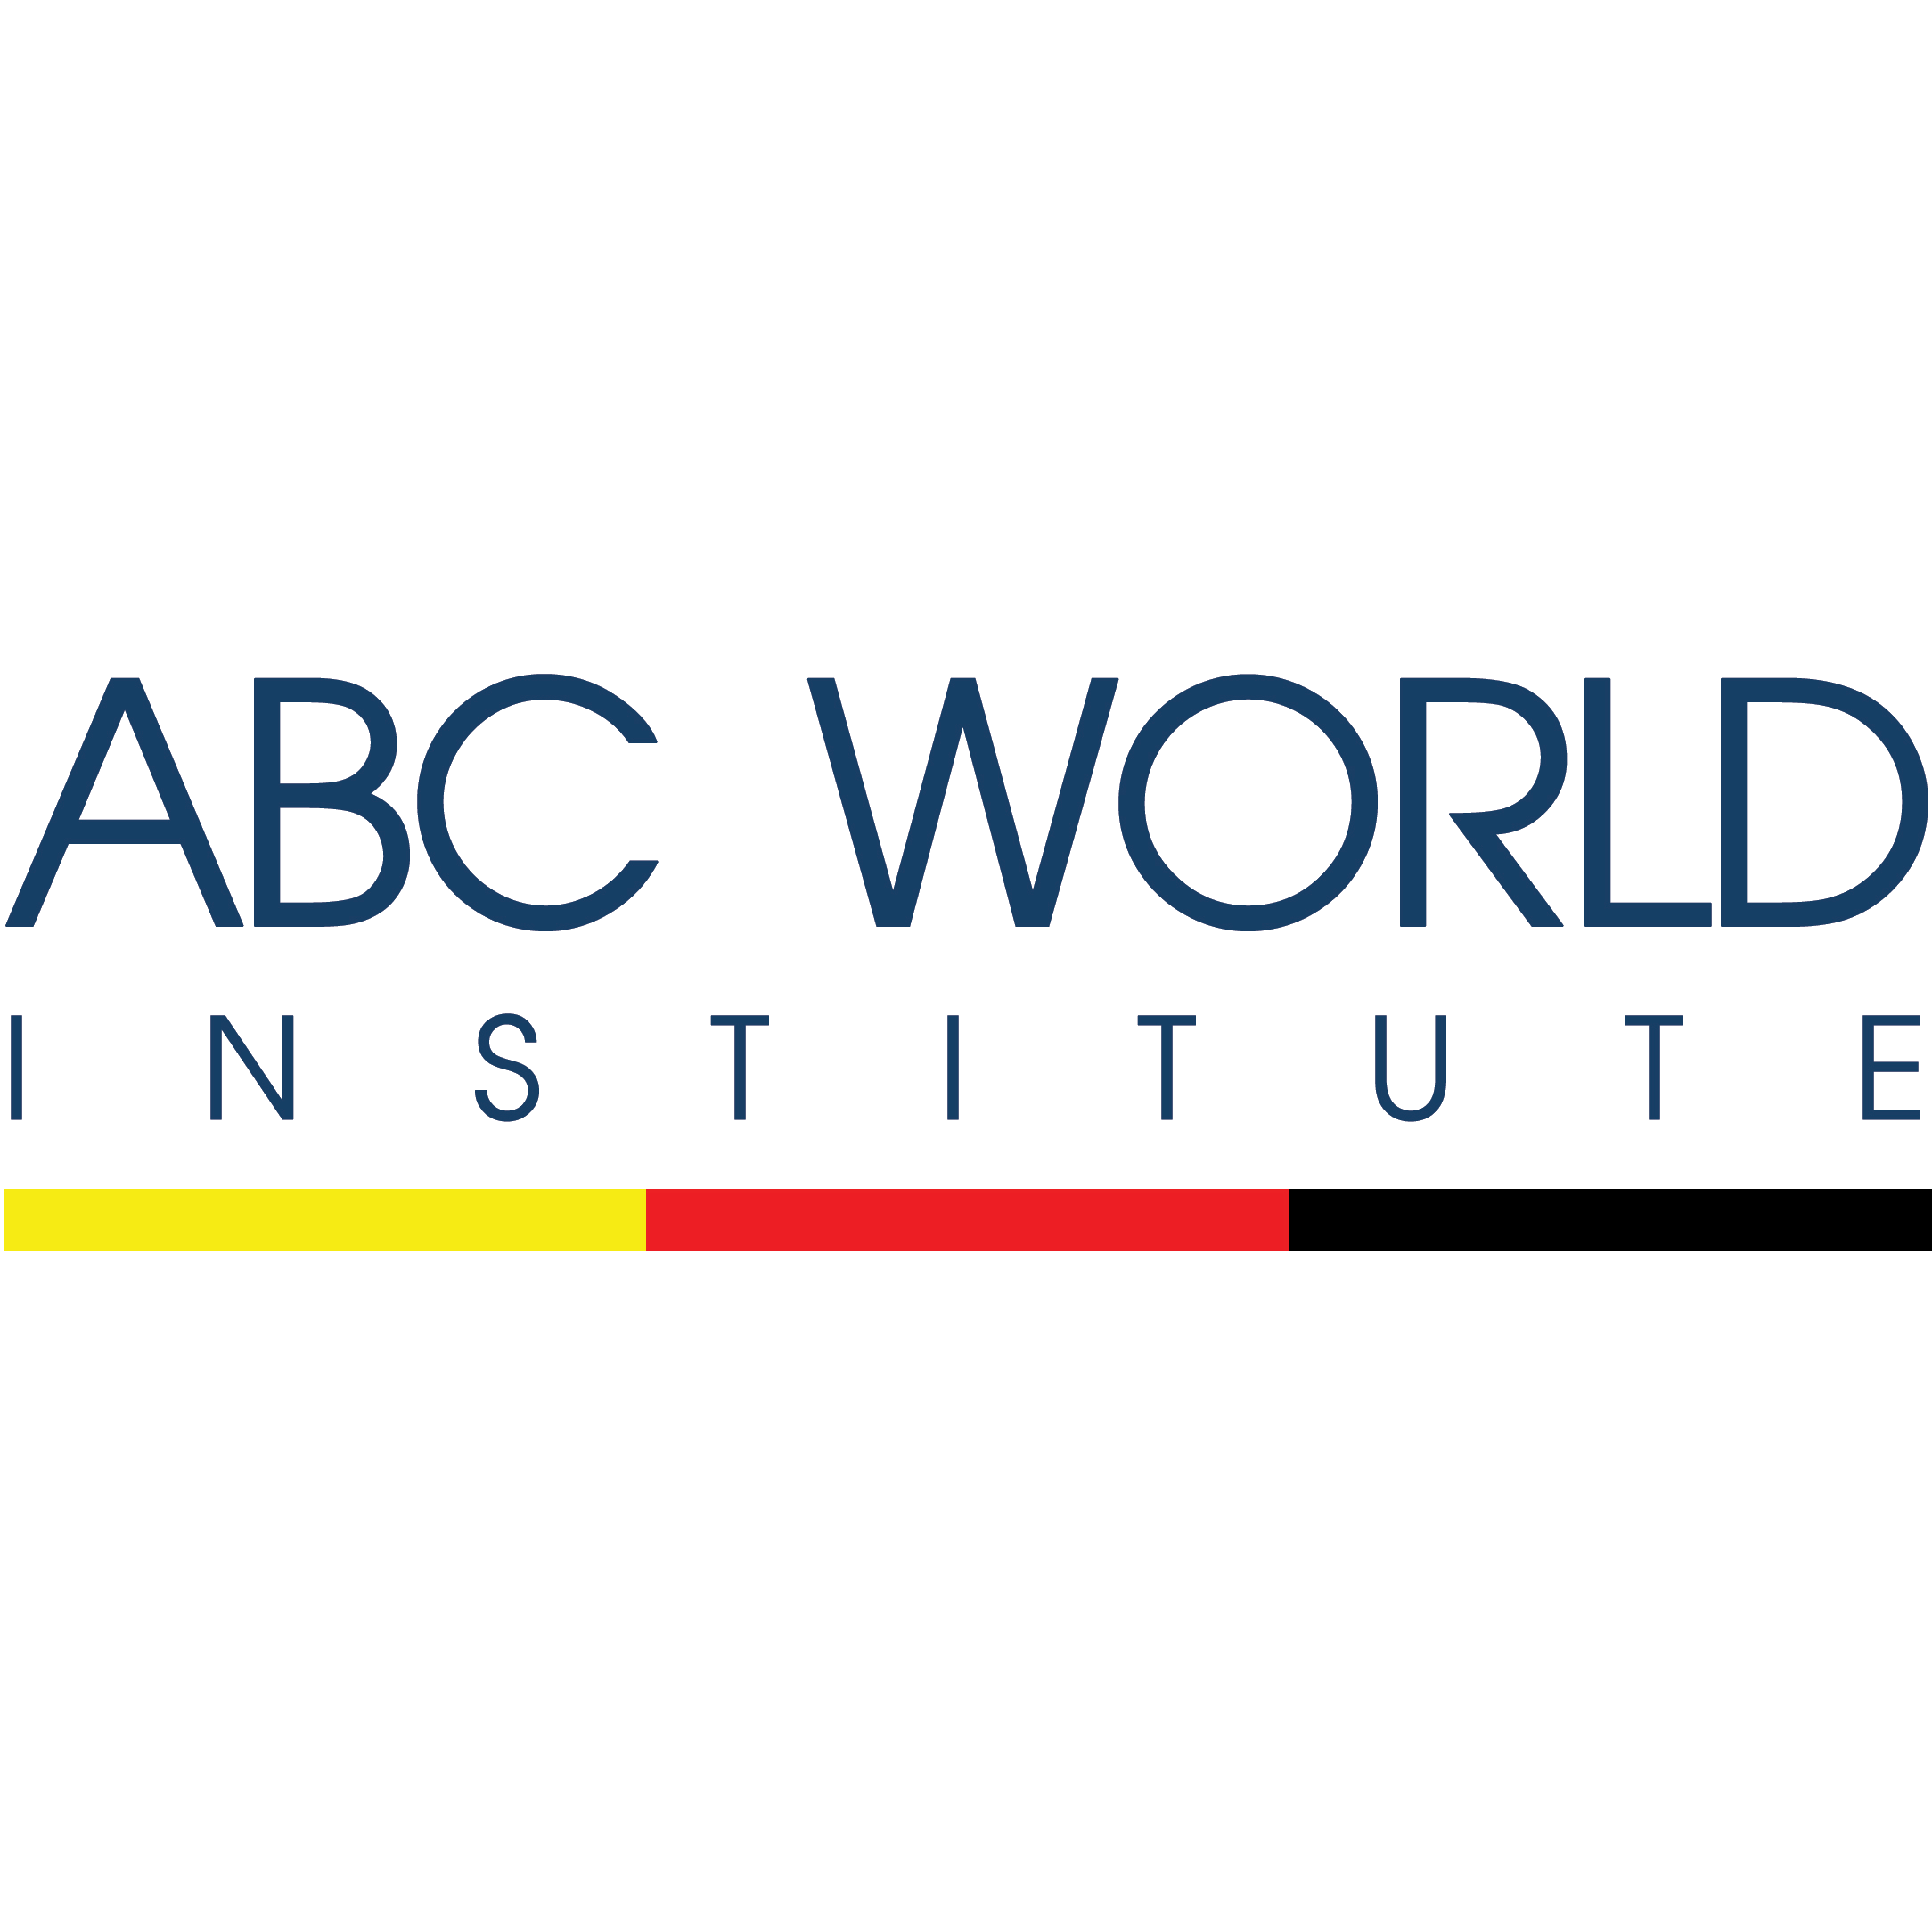 A1-A2 test - ABC WORLD